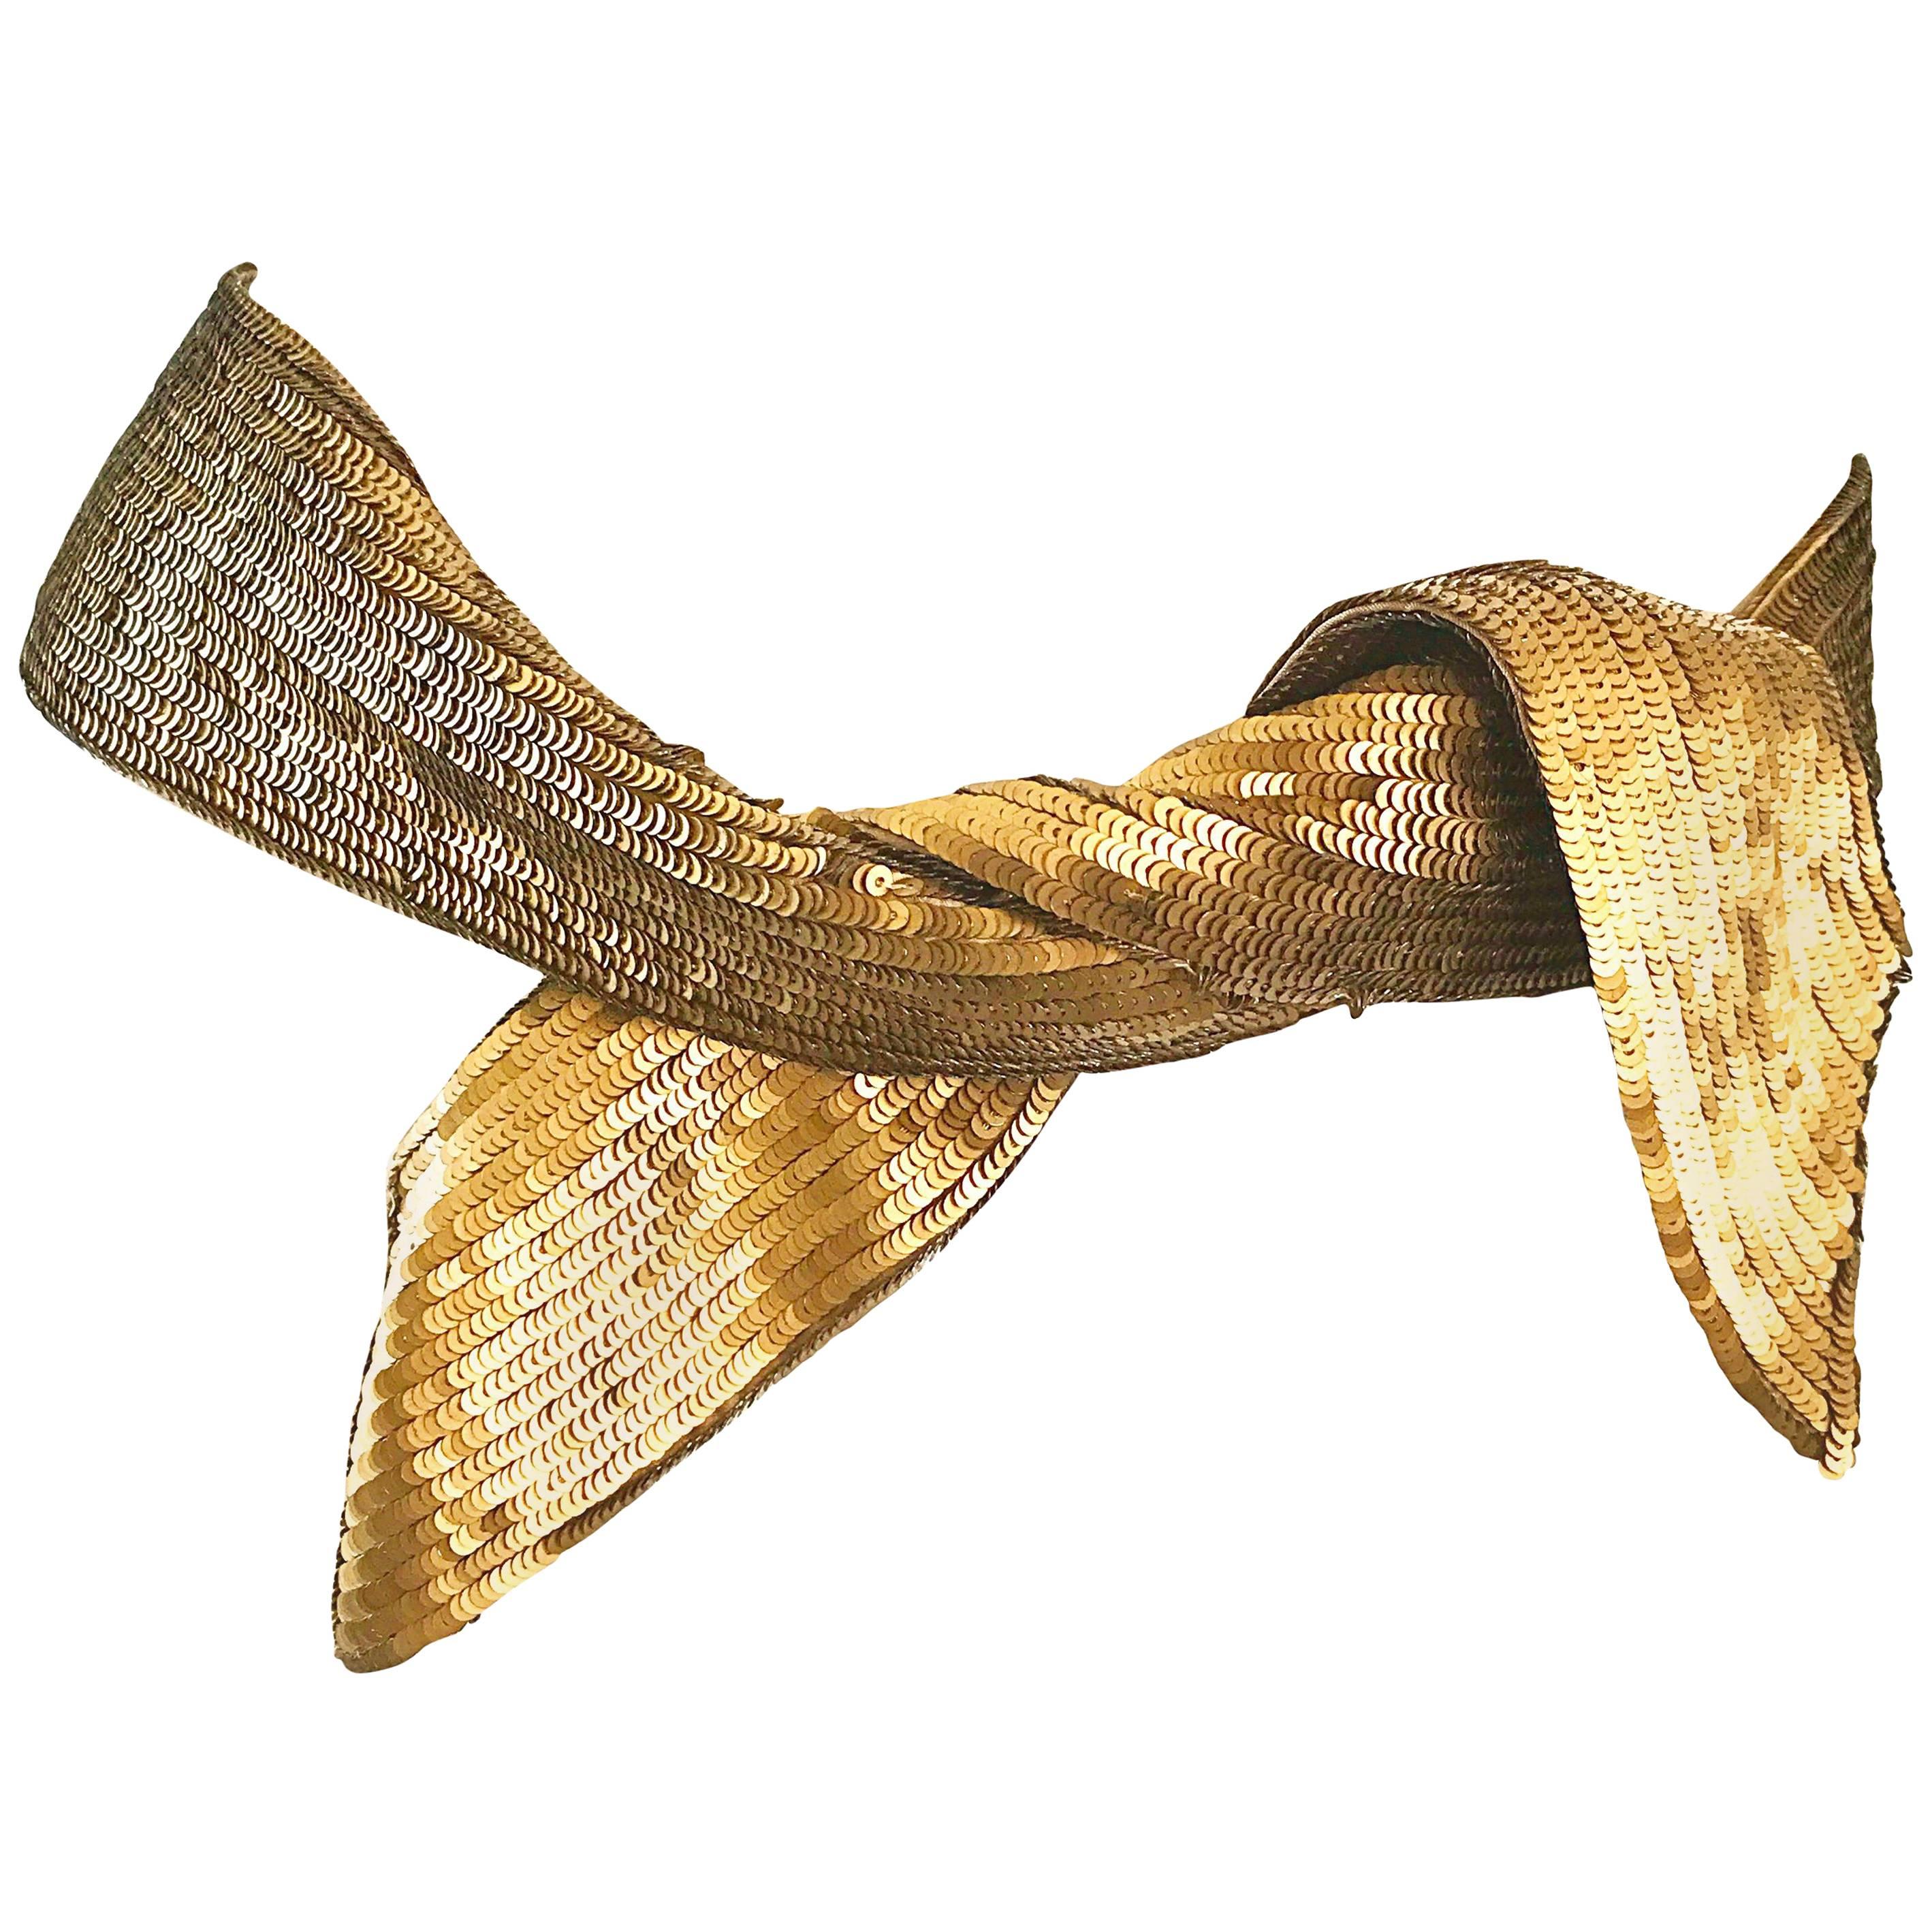 Neuer Proenza Schouler Bronze Gold Metallic Pailletten Seide Krawatte Schärpe Gürtel Haarschal 